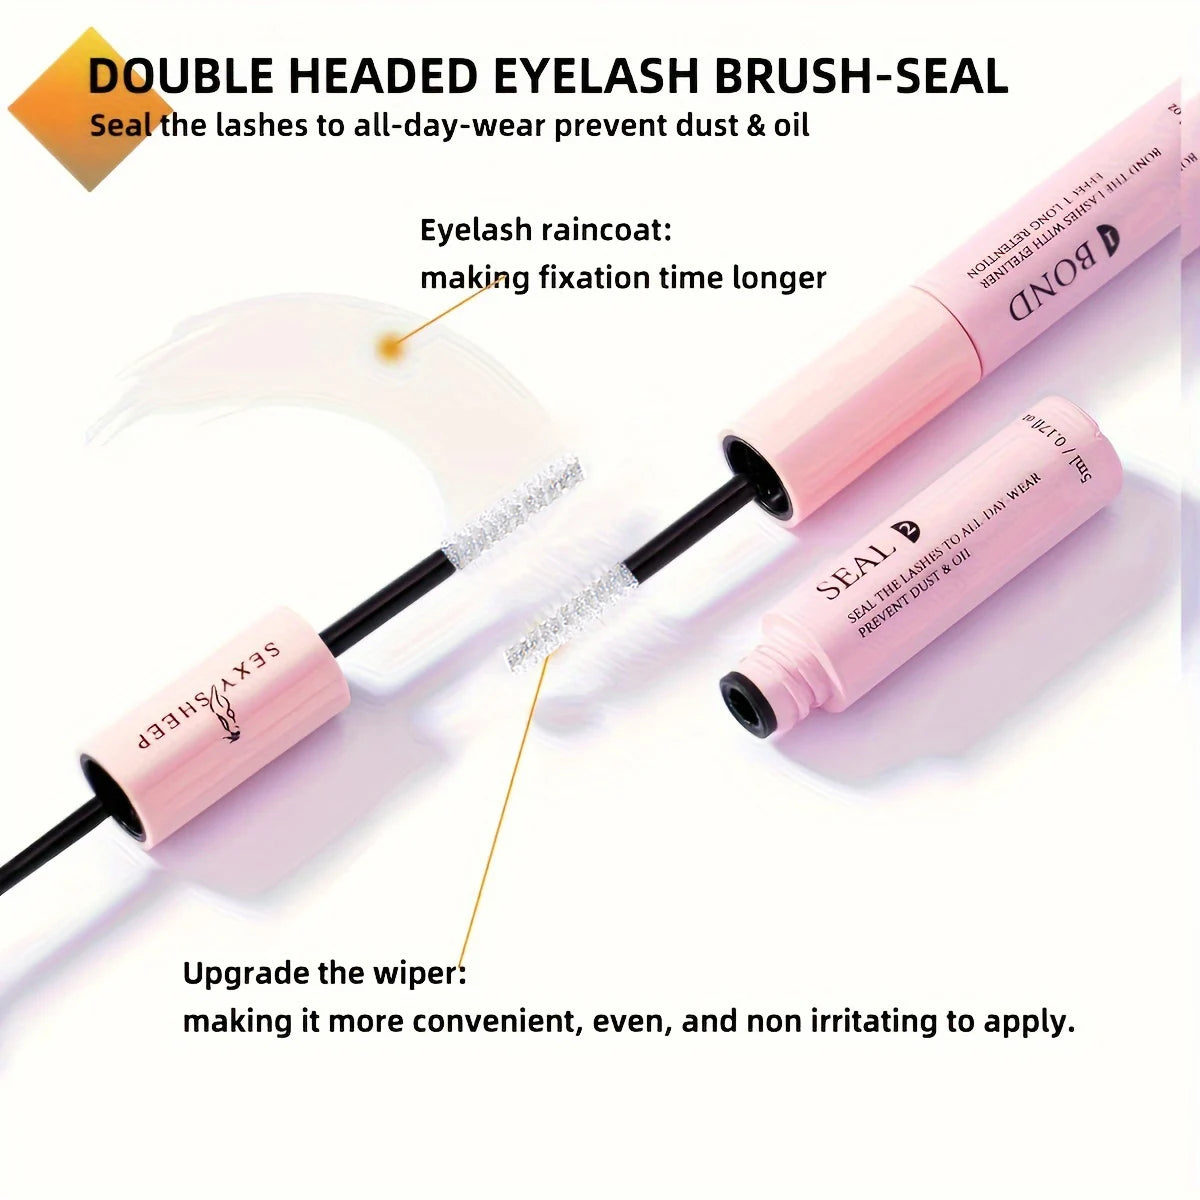 Diy Lash Extension Kit,Cluster Eyelash Extension Kit,Individual Lashes Kit,Lash Bond and Seal,Lash Glue and Lash Applicator